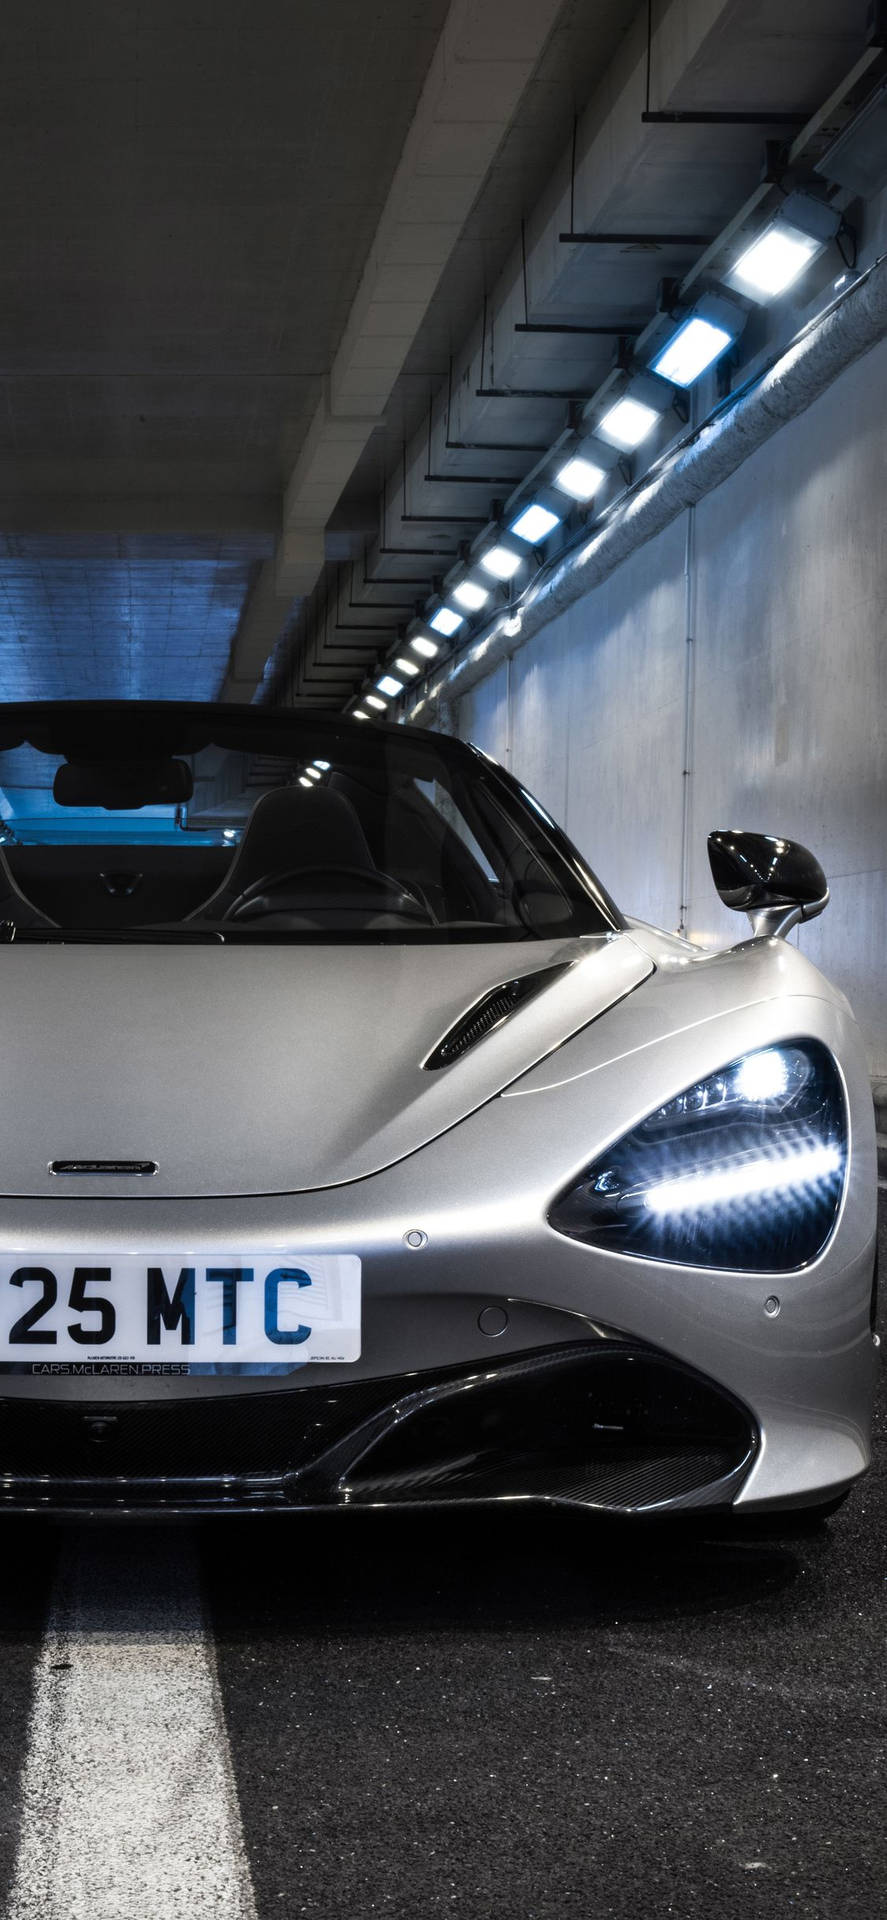 Mclaren 720s White Car In Tunnel Phone Wallpaper